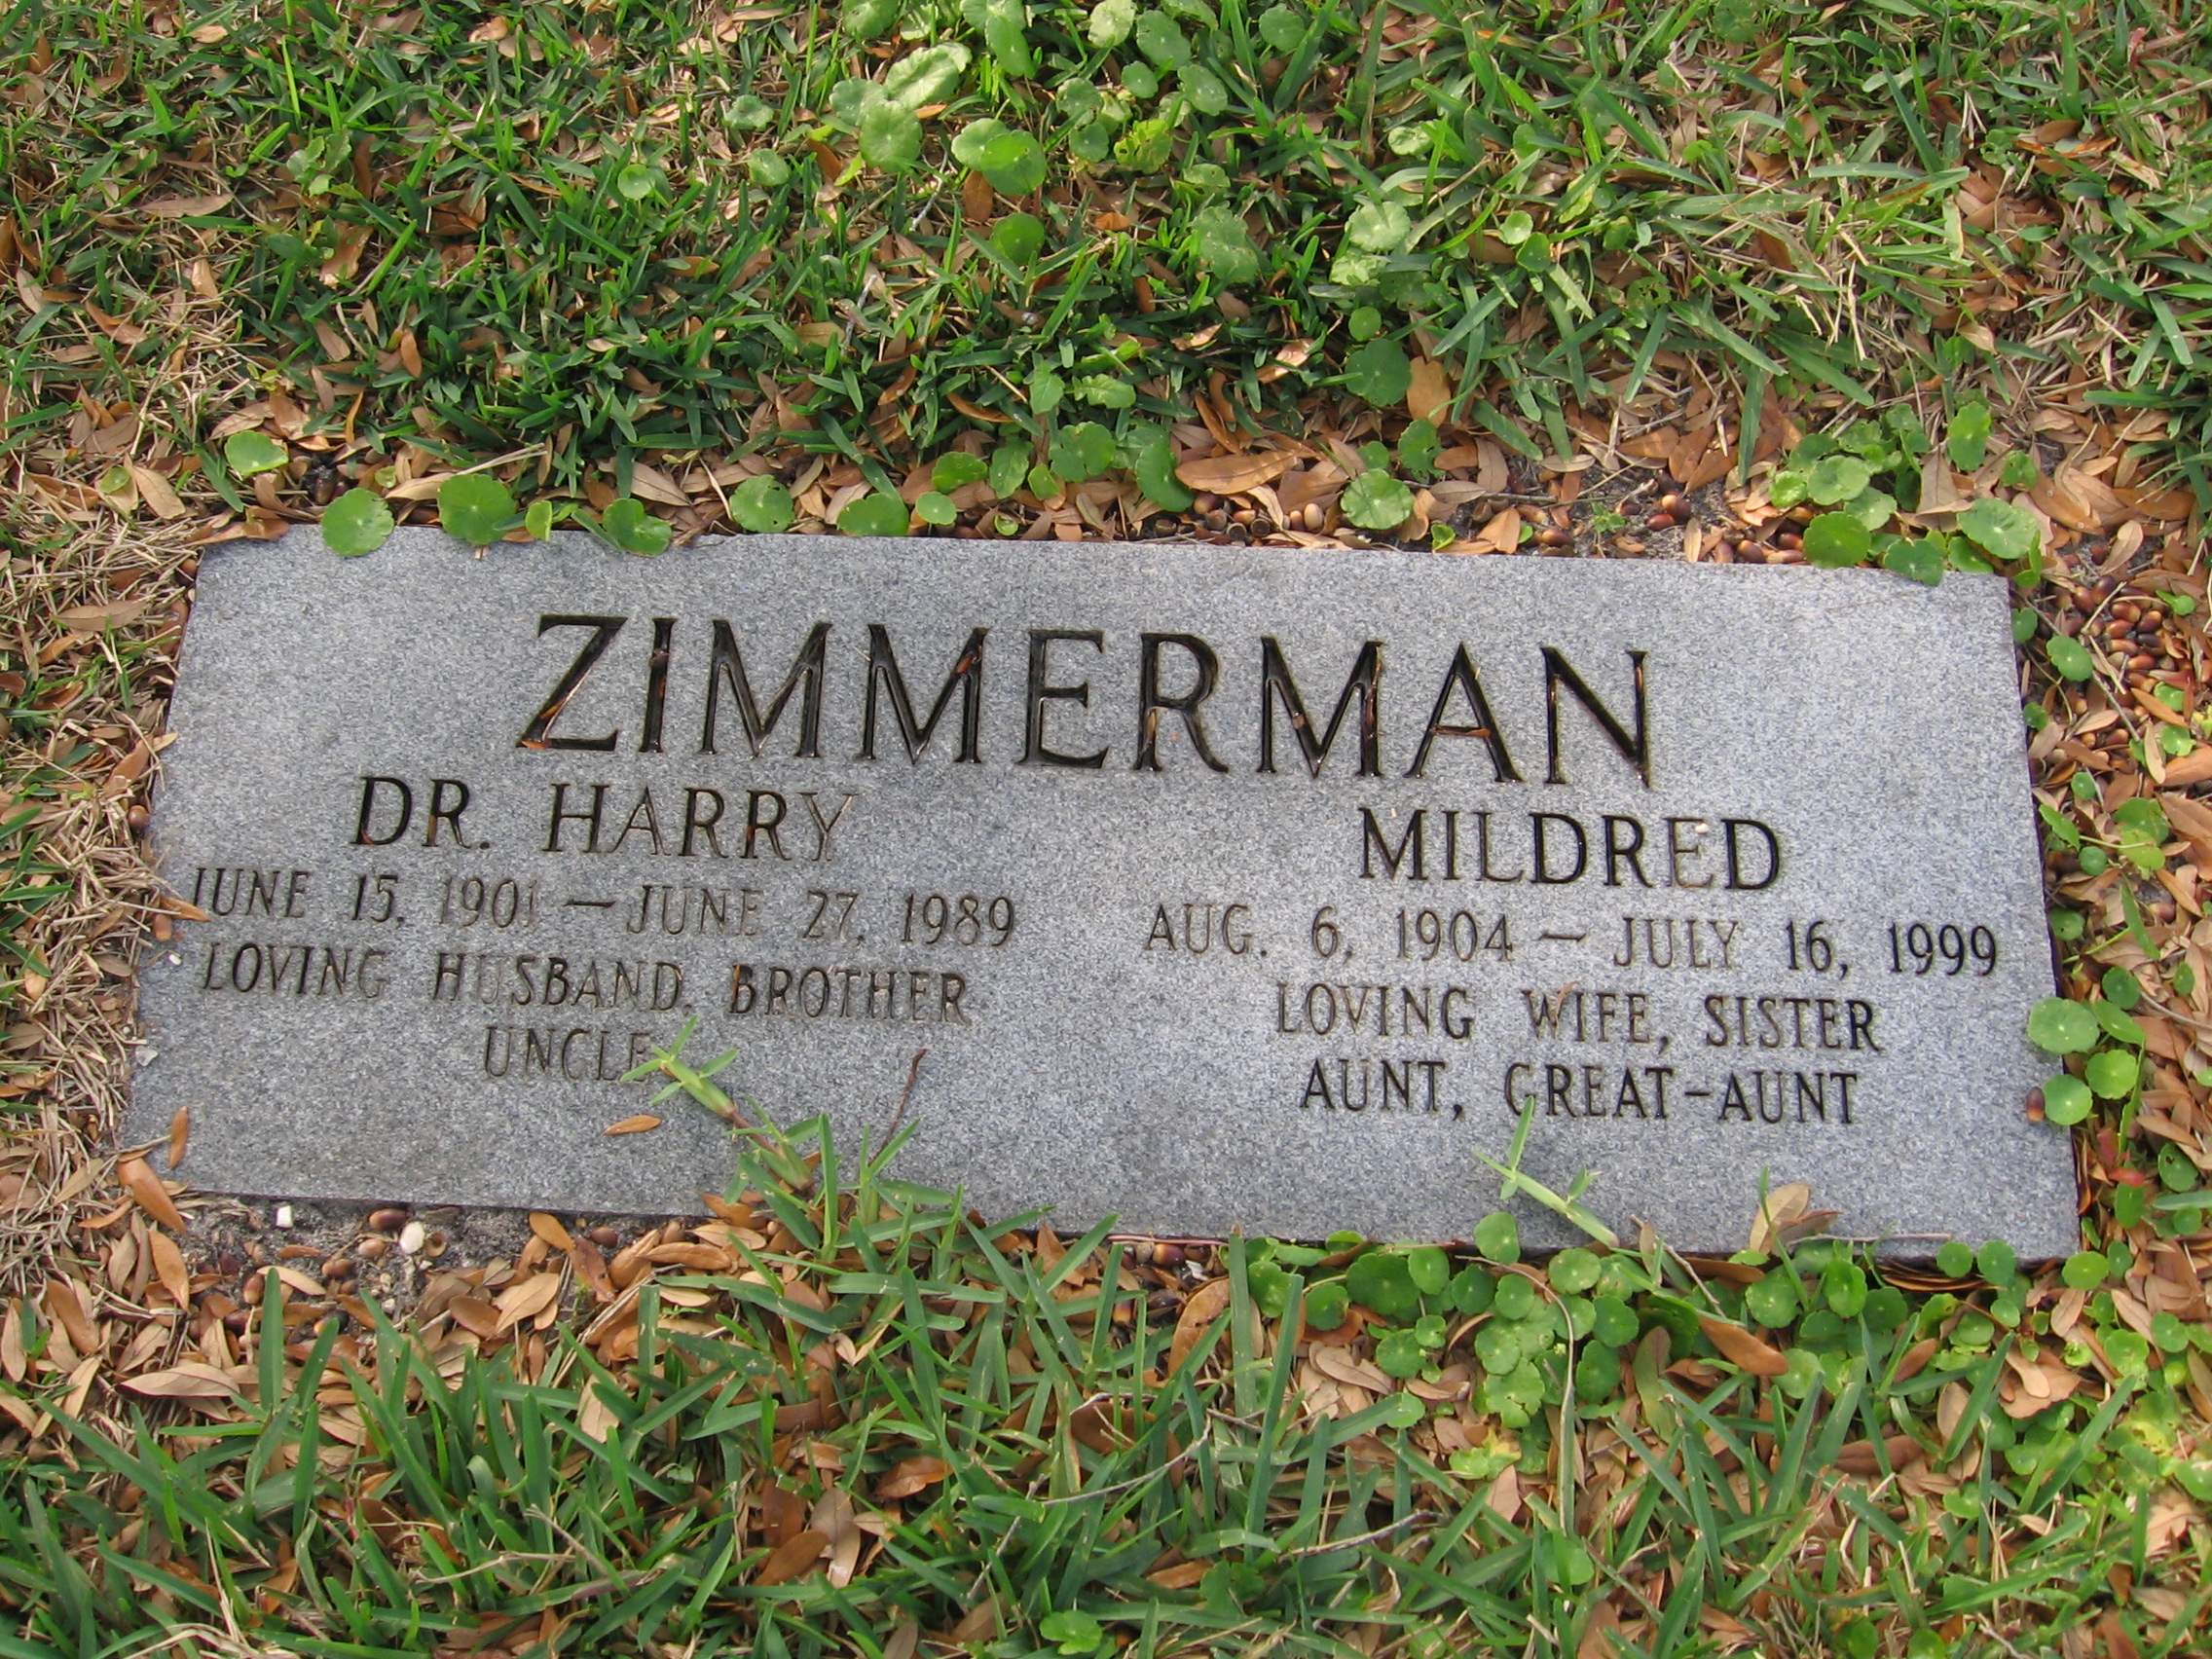 Dr Harry Zimmerman